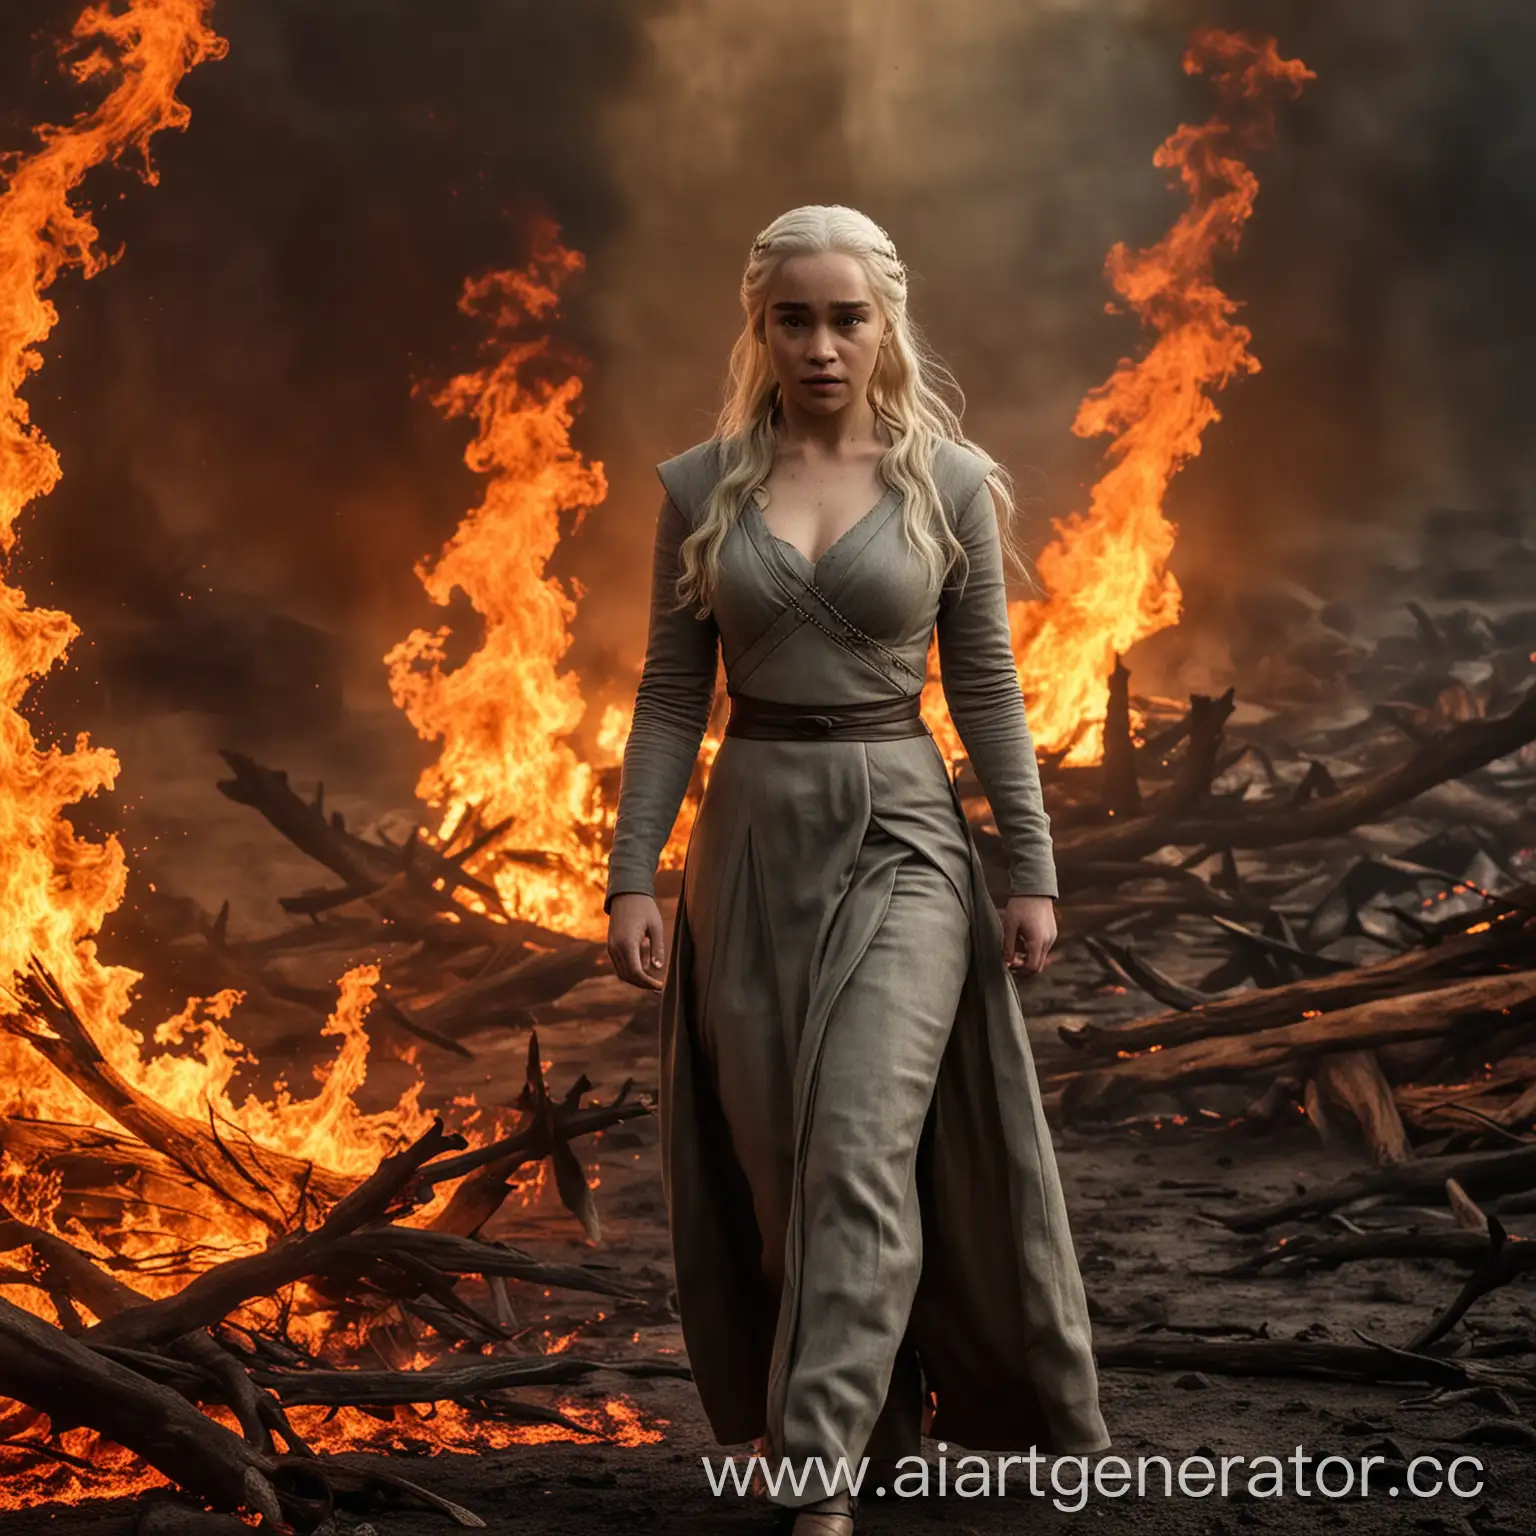 Emilia-Clarke-as-Daenerys-Targaryen-Walking-Through-Flames-Fantasy-Portrait-Art